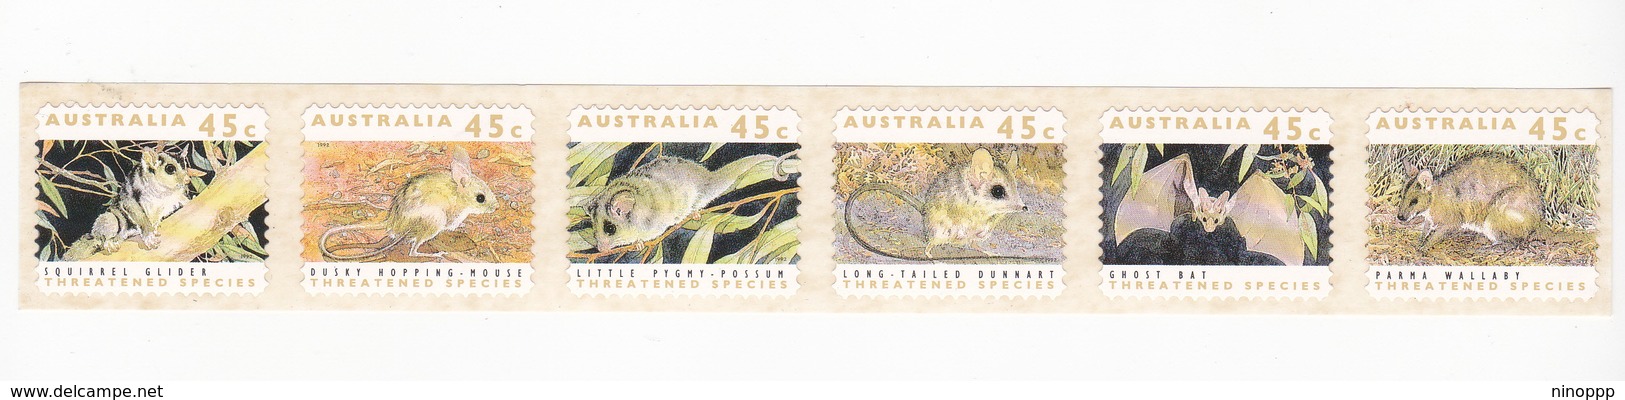 Australia ASC 1325b 1992 Threatened Species, PRINTSET Printing, 1 Kangaroo, Mint Never Hinged Stamps - Mint Stamps